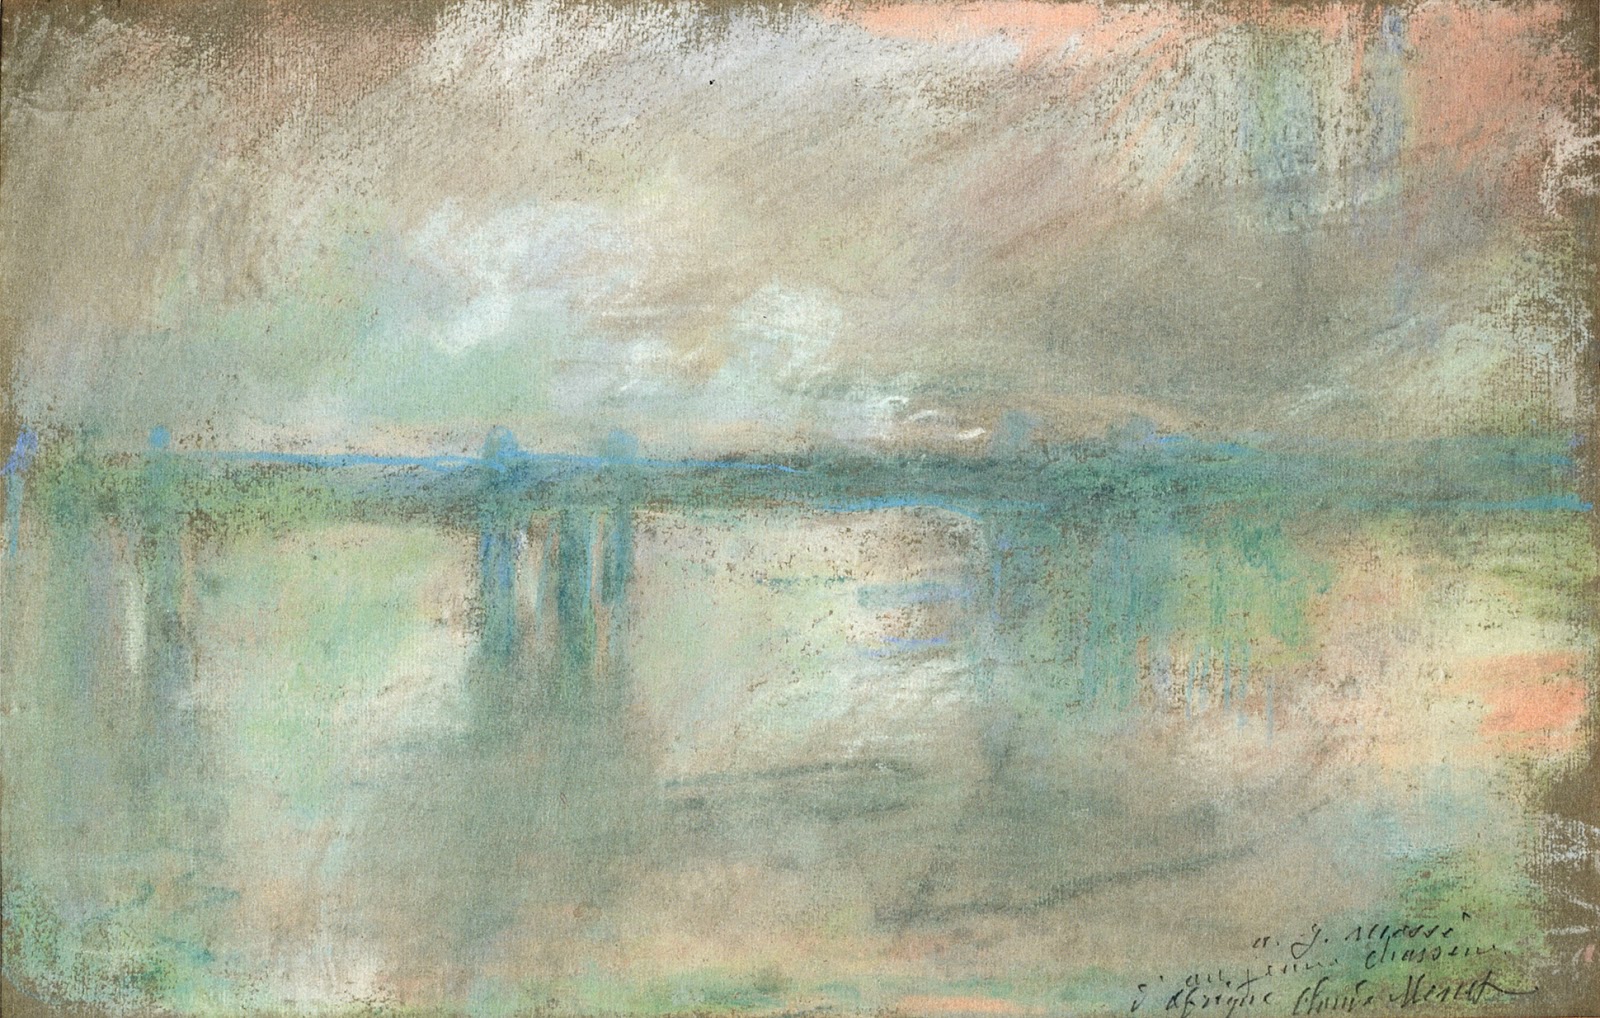 Claude+Monet-1840-1926 (915).jpg